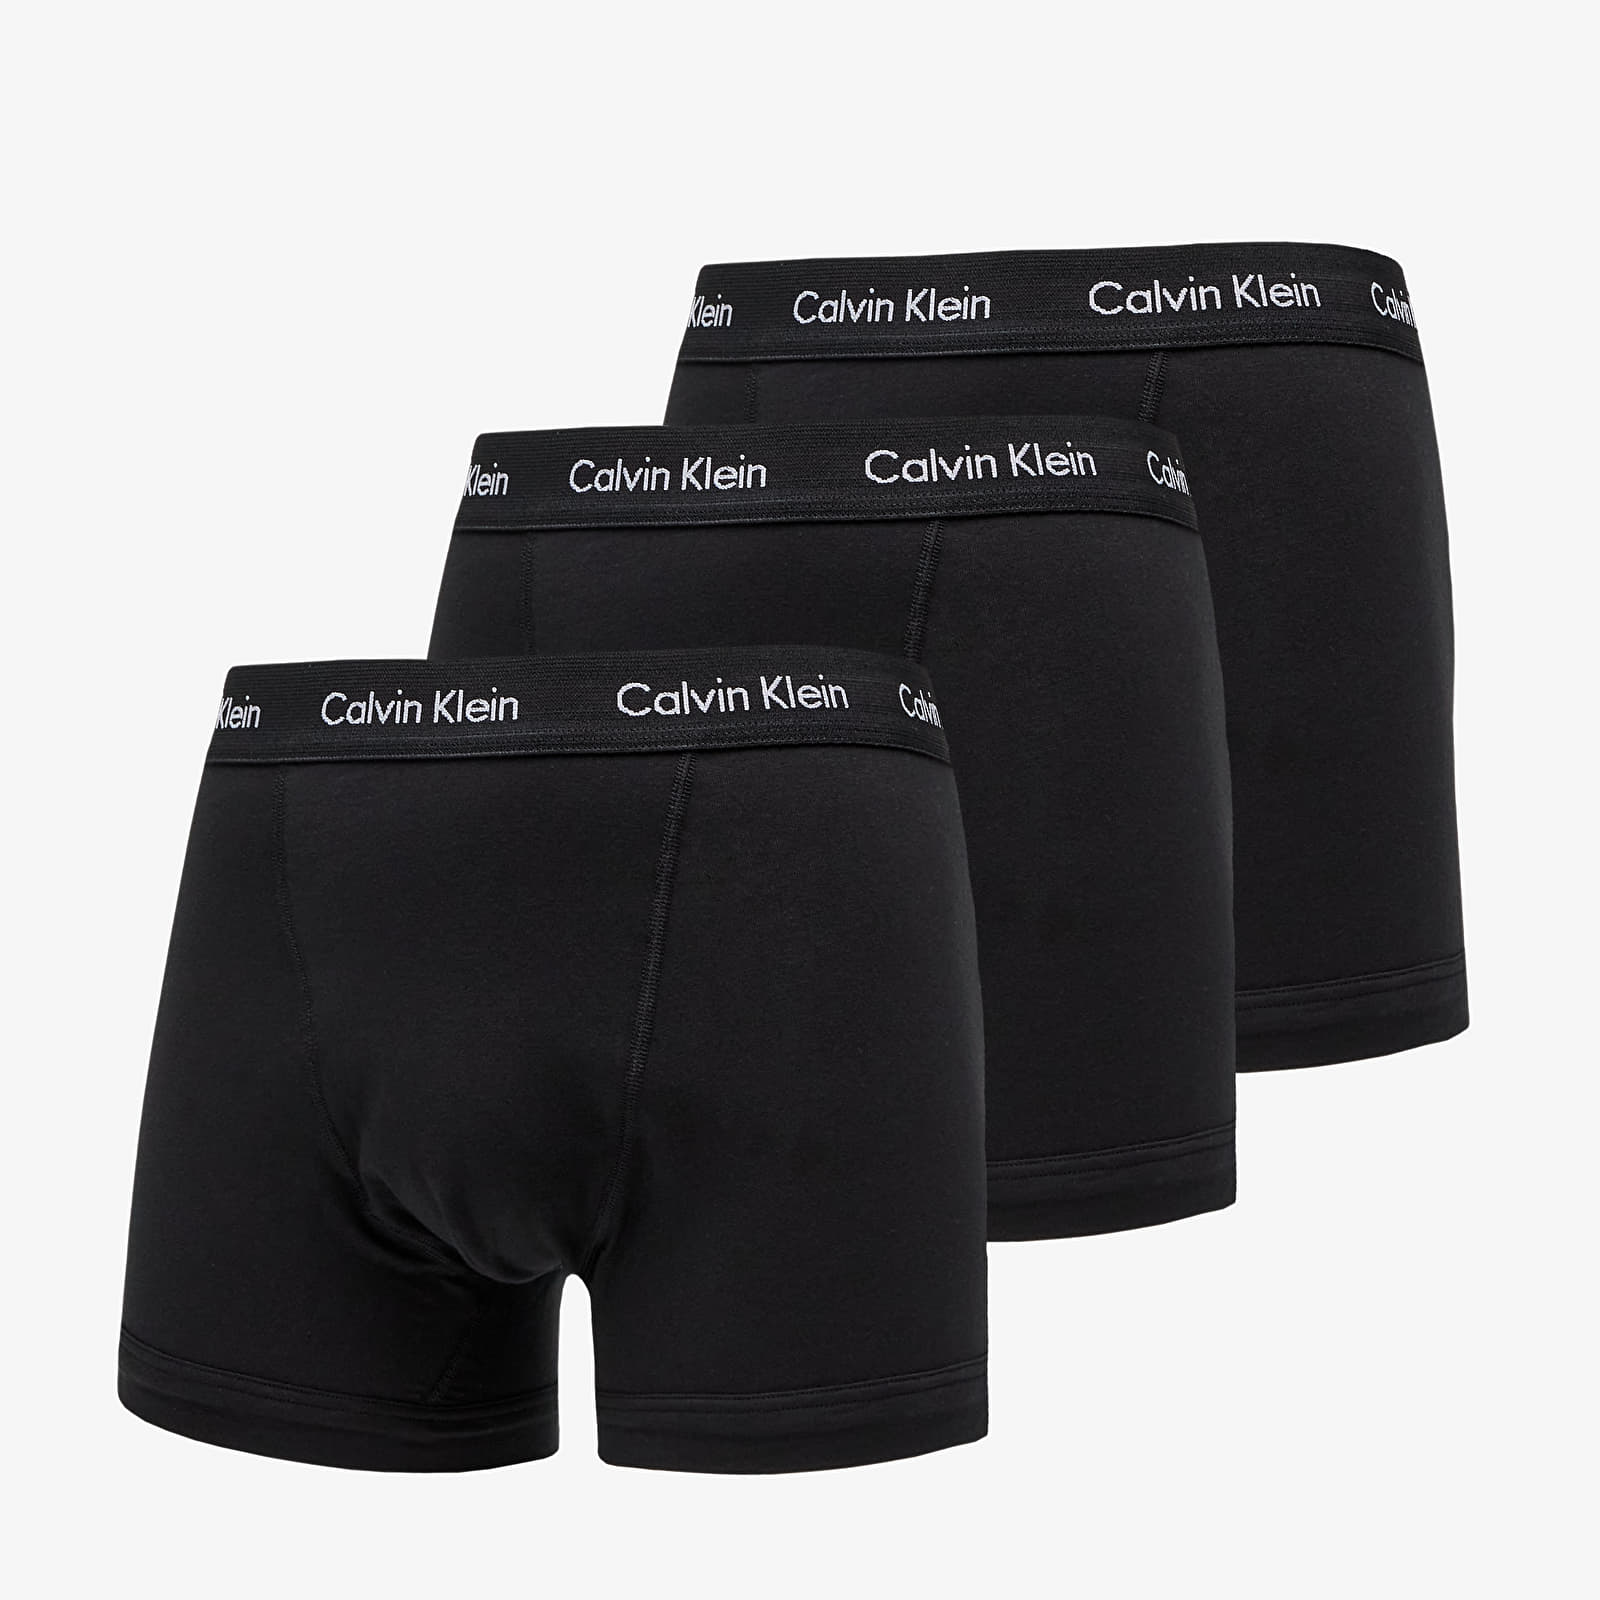 Boxer shorts Calvin Klein 3-Pack Trunks Cotton Stretch Black